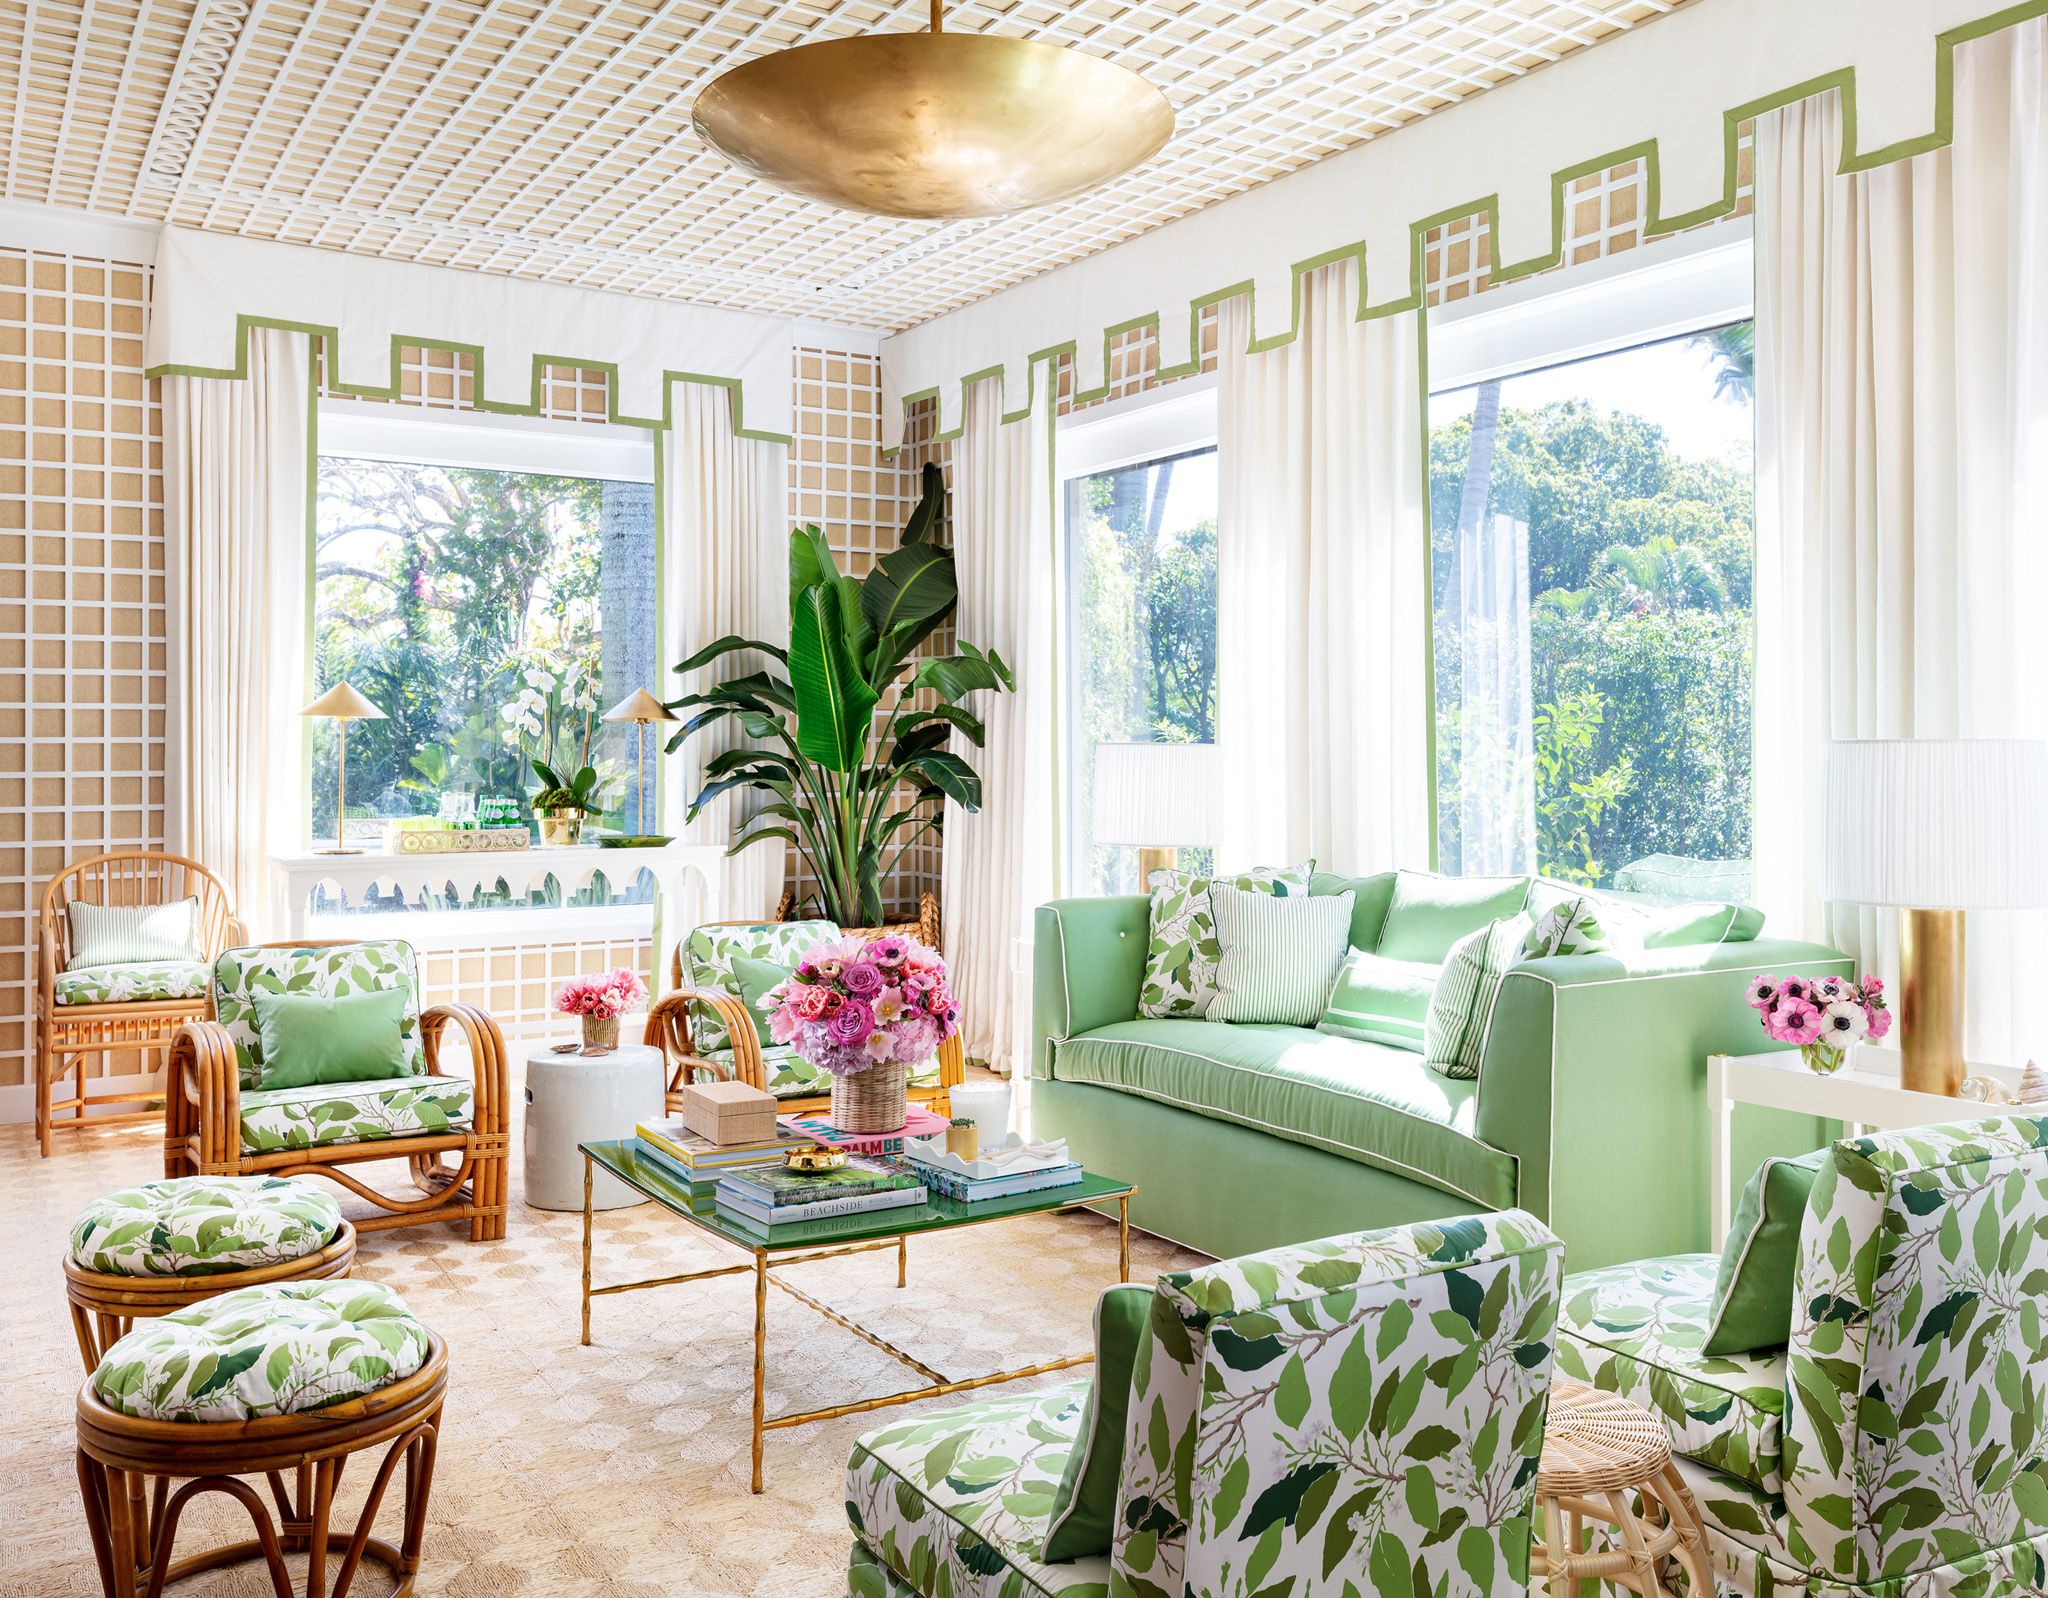 Green Cheetah Fabric, Wallpaper and Home Decor